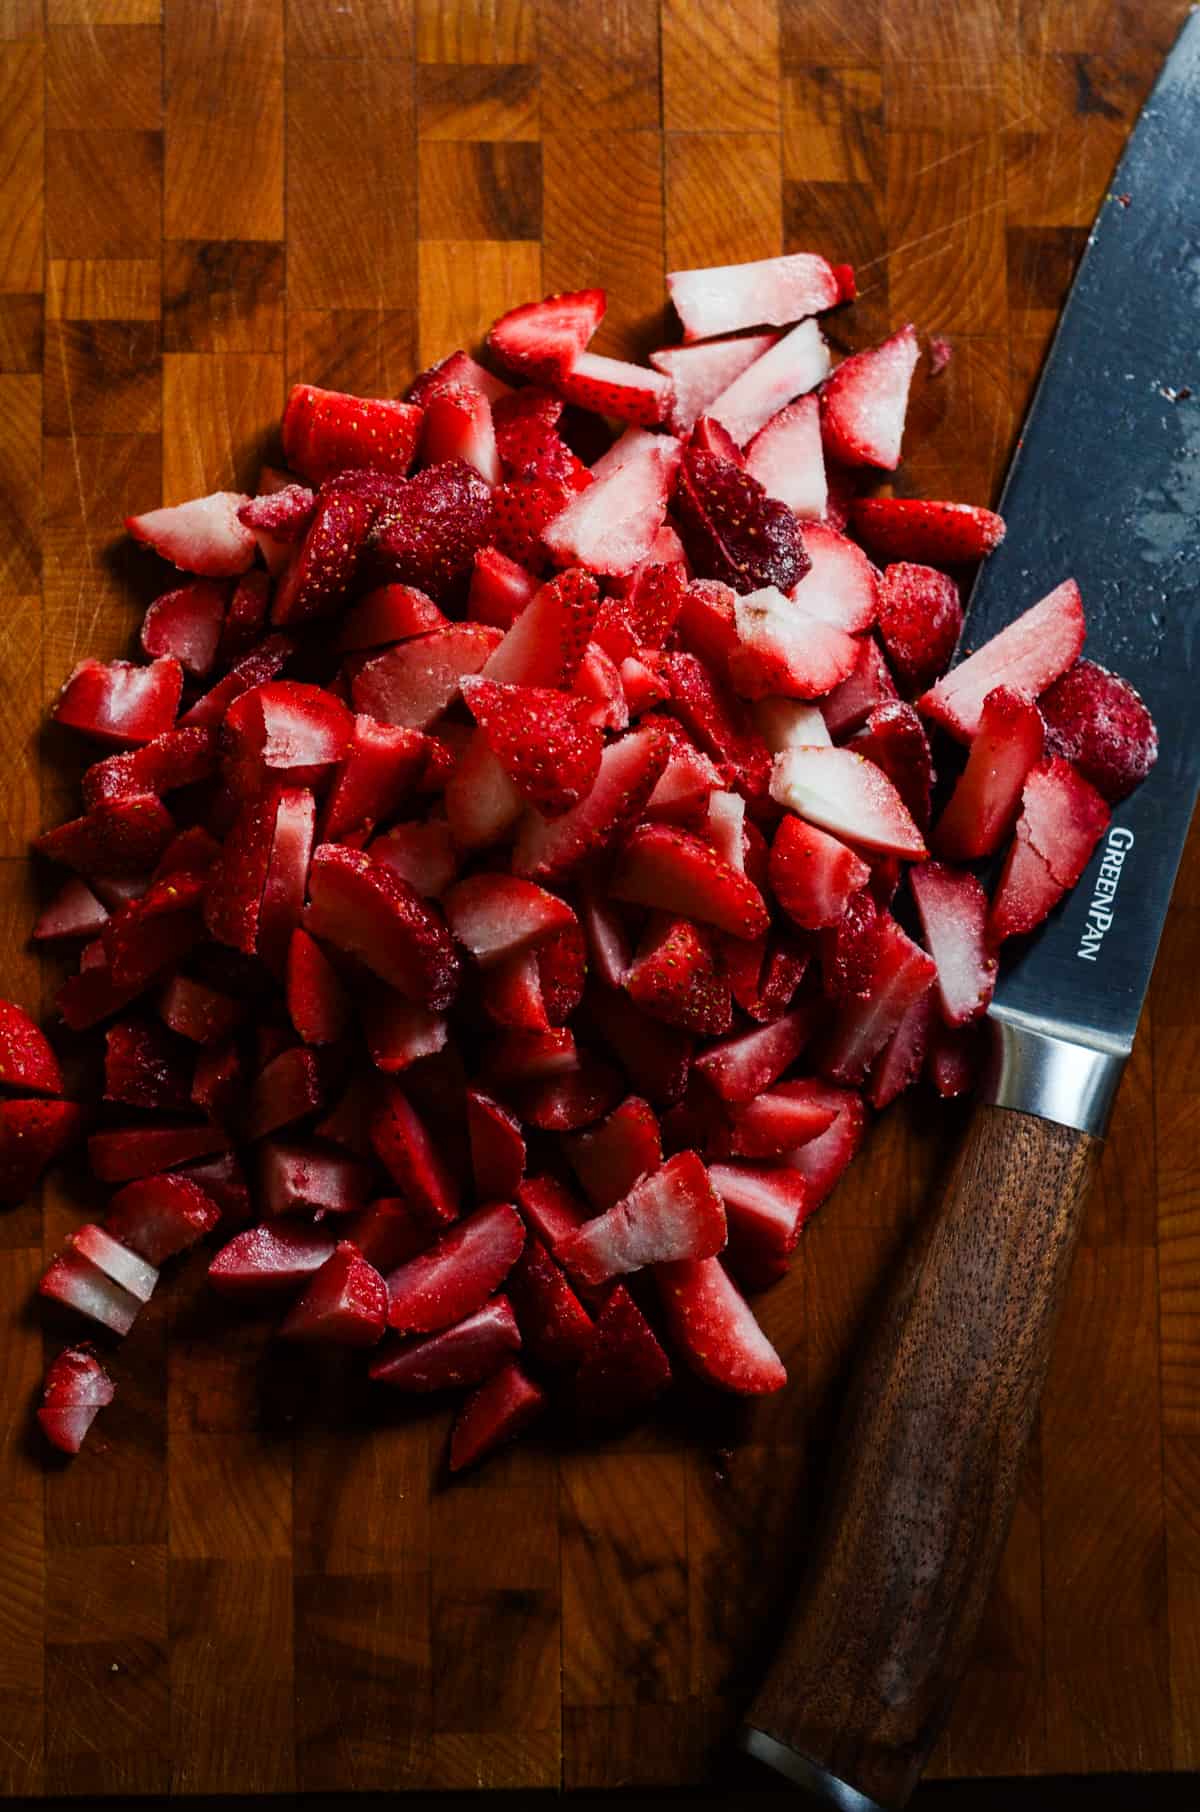 Frozen strawberries on a cutting board.